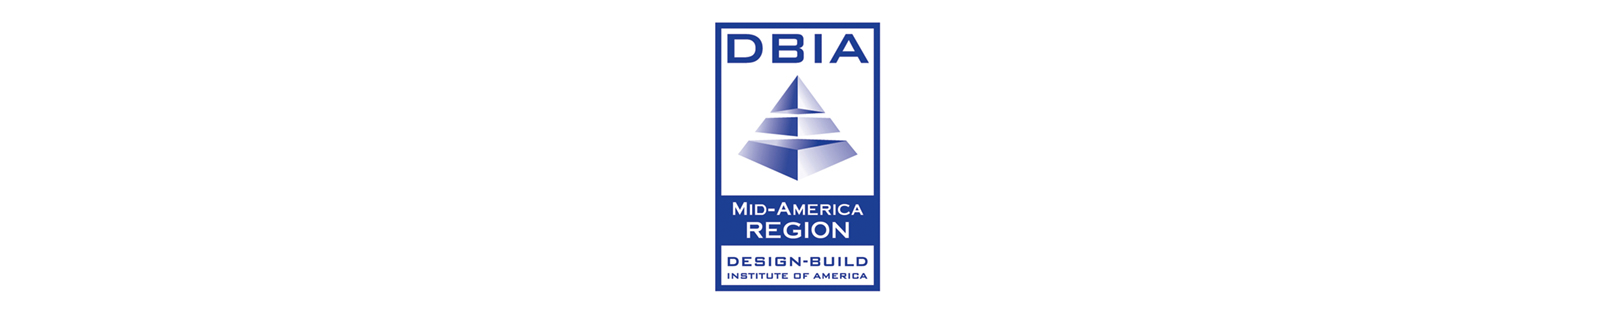 DBIA header with logo